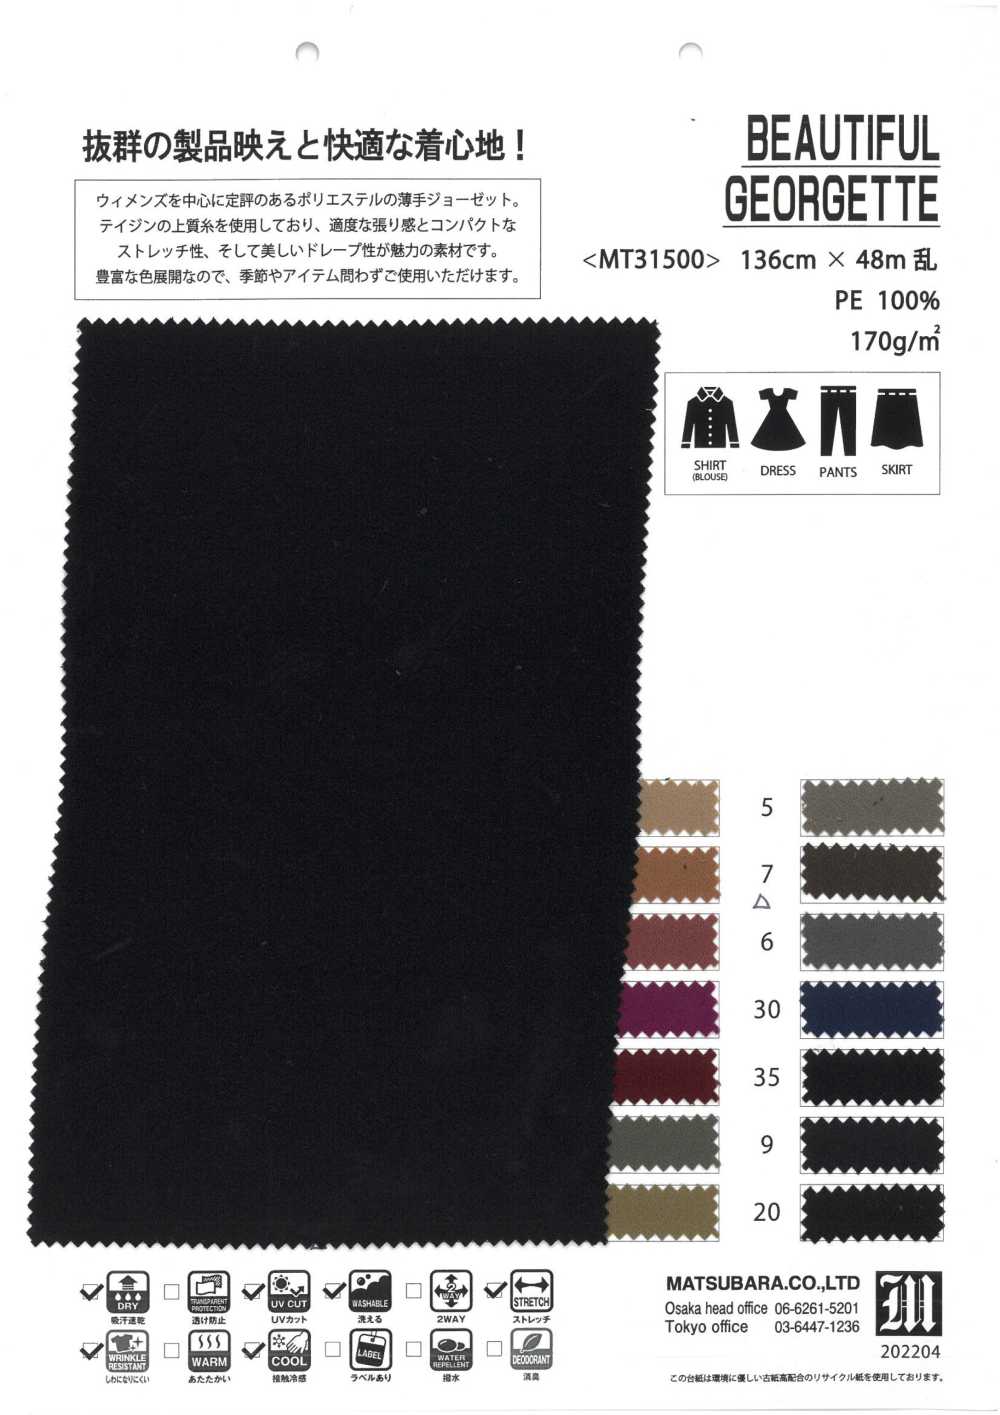 MT31500 BEAUTIFUL GEOGETTE[Textile / Fabric] Matsubara